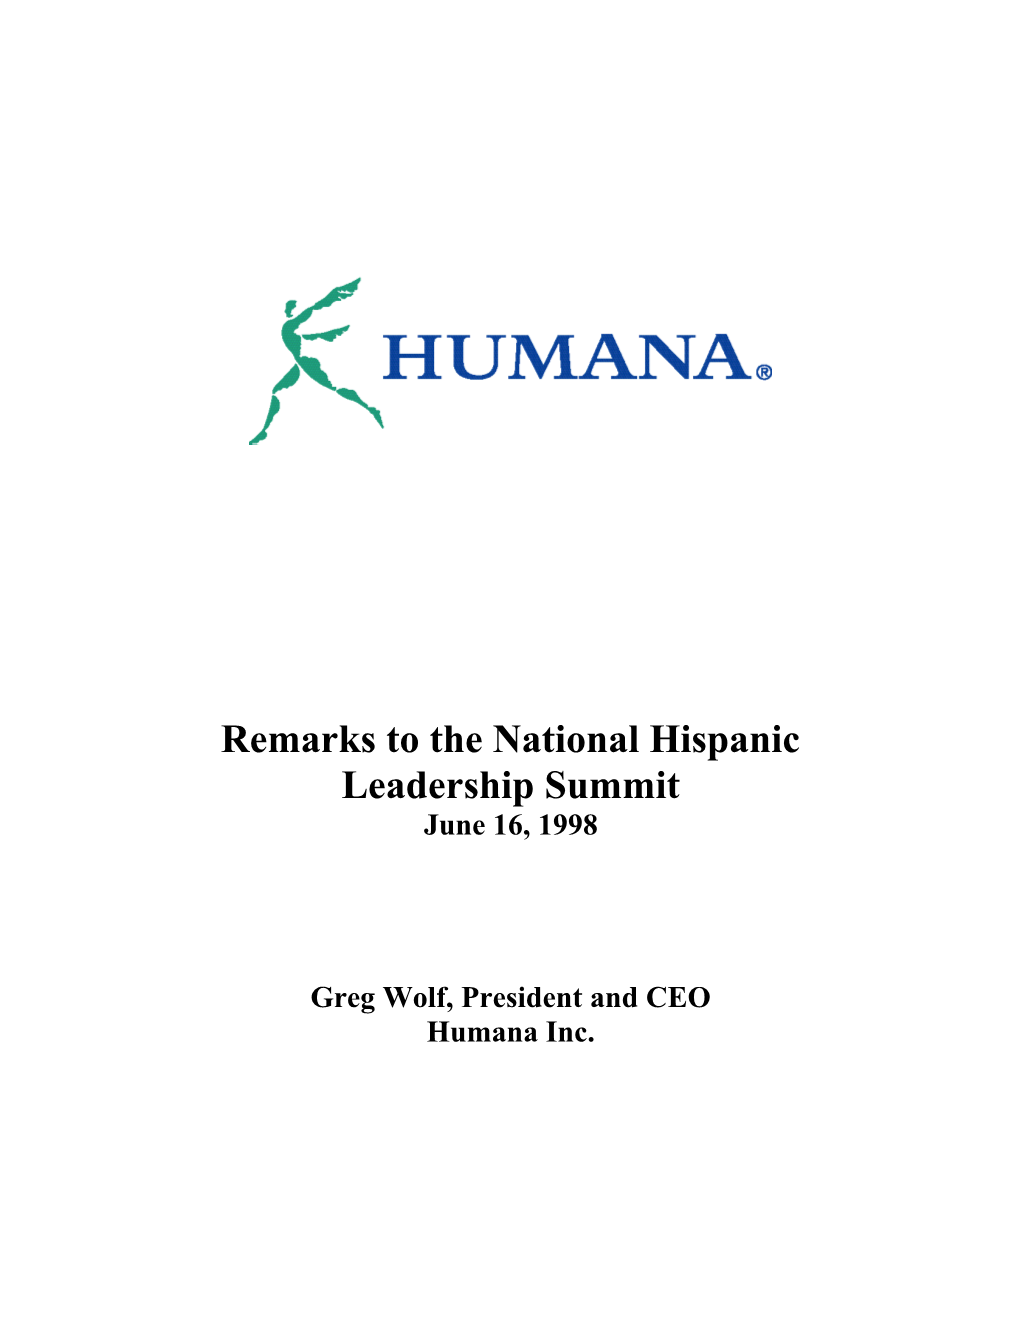 Remarks to the National Hispanic Leadership Summit